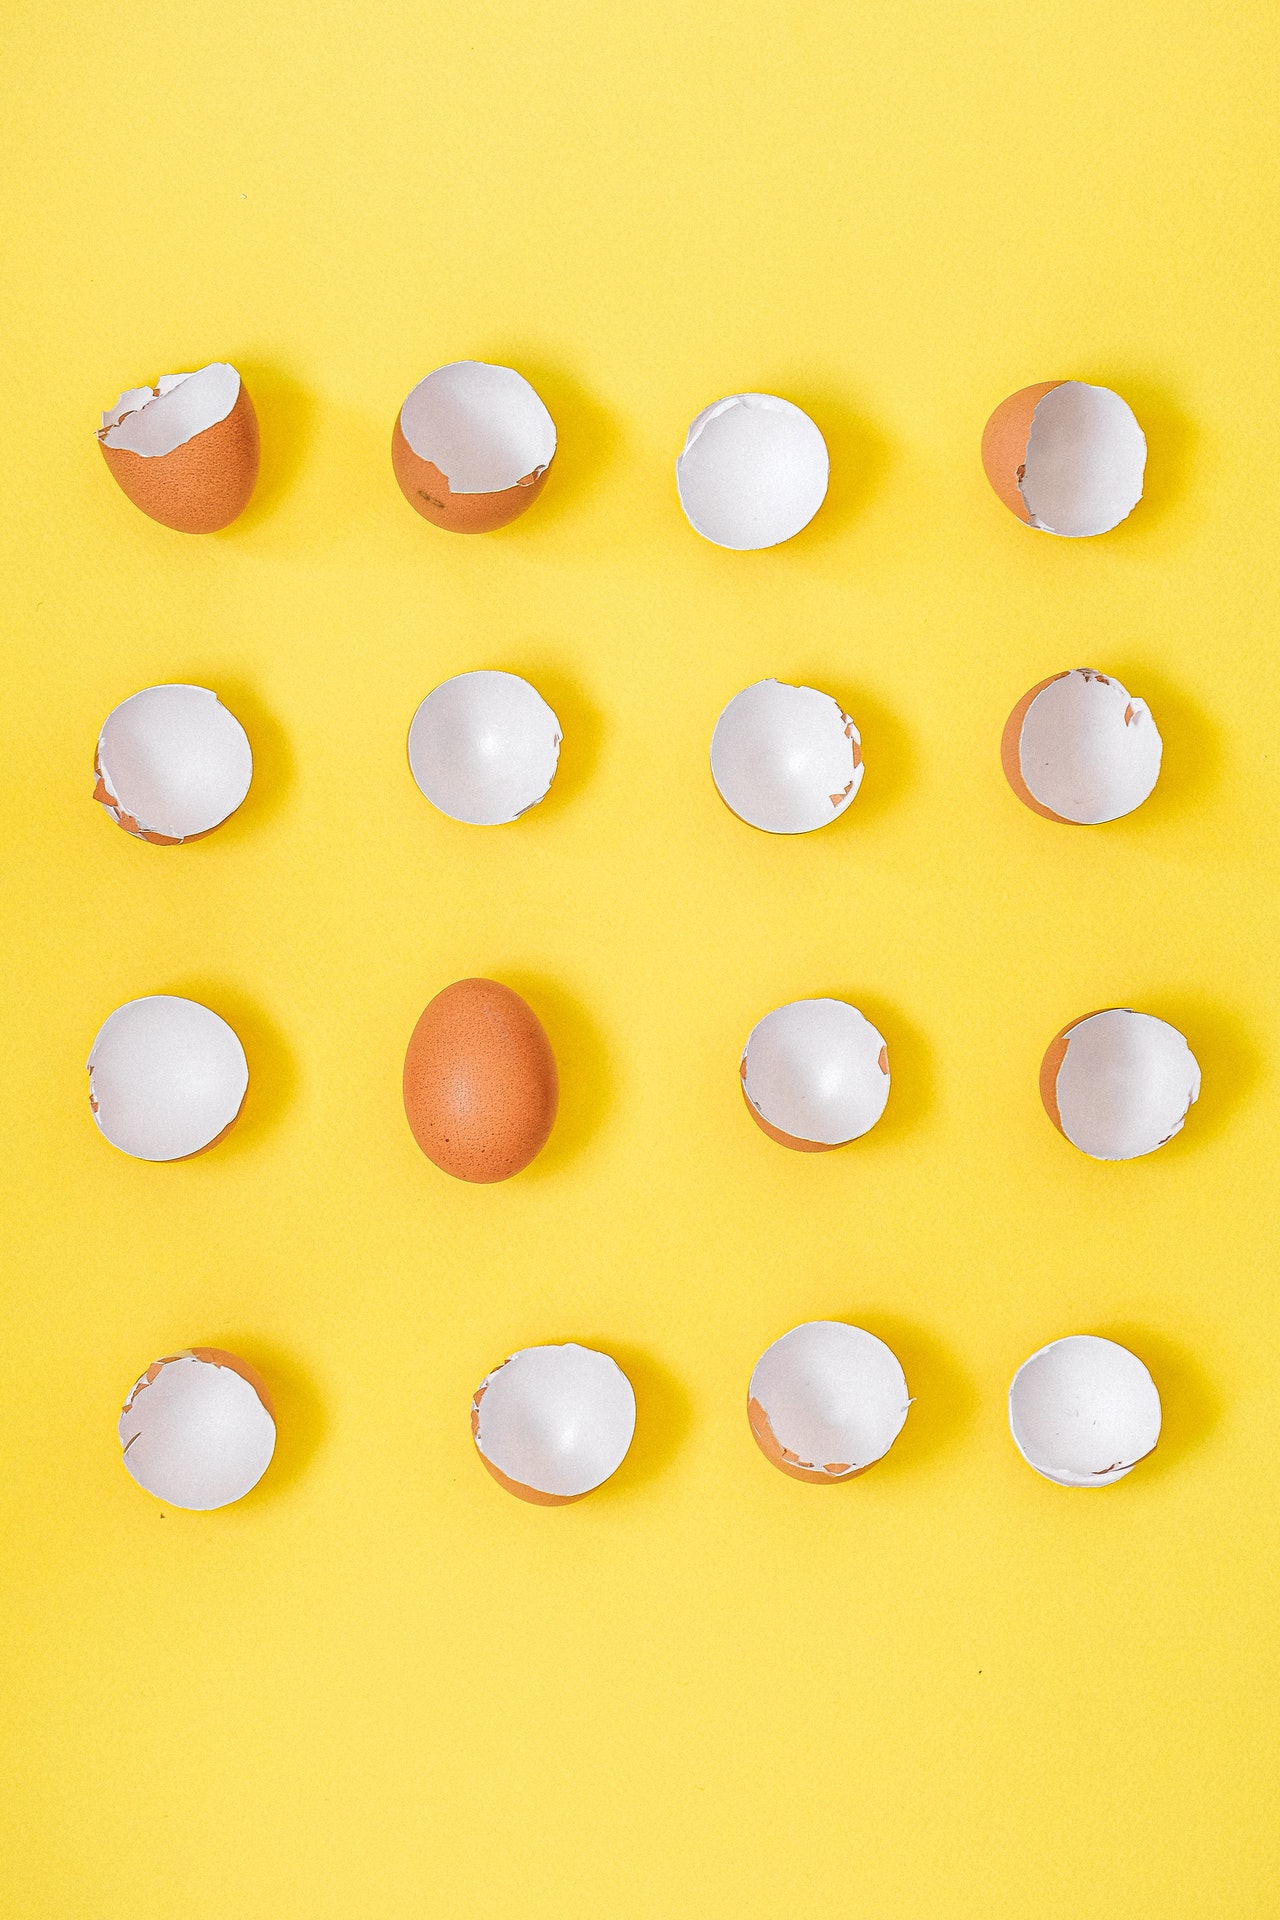 Eggshells source of calcium.